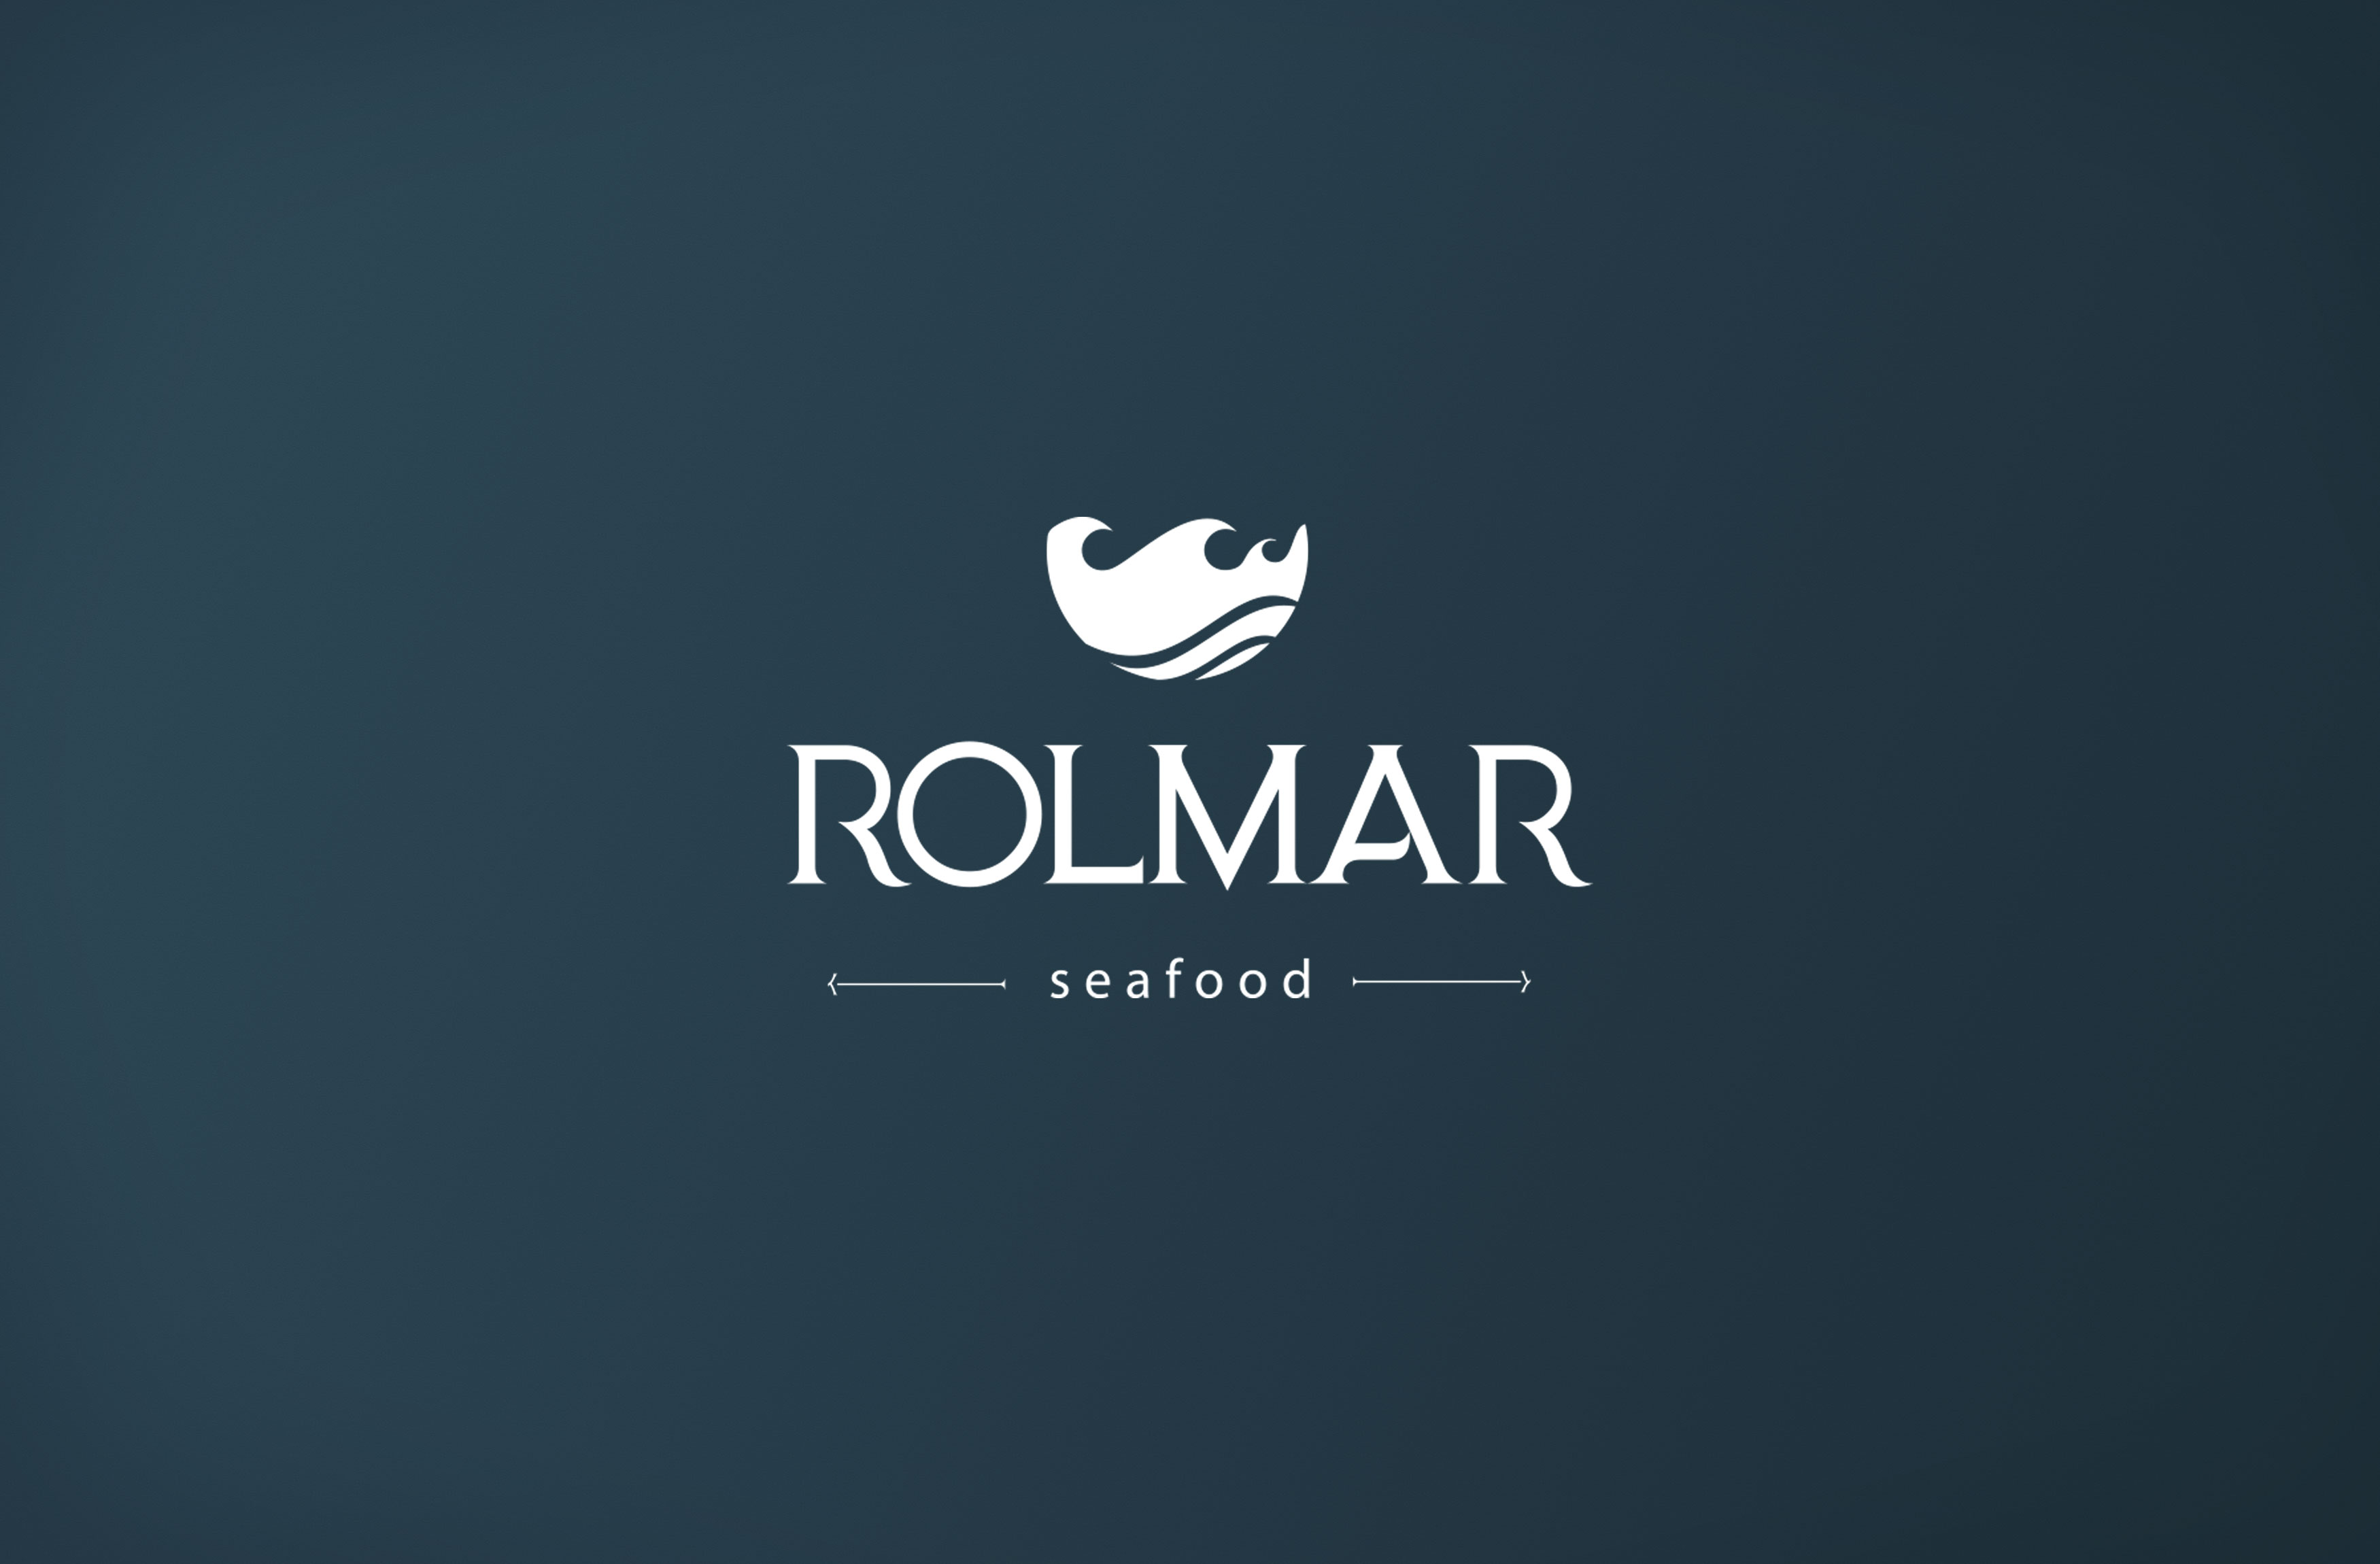 Diseño marca gráfica Rolmar